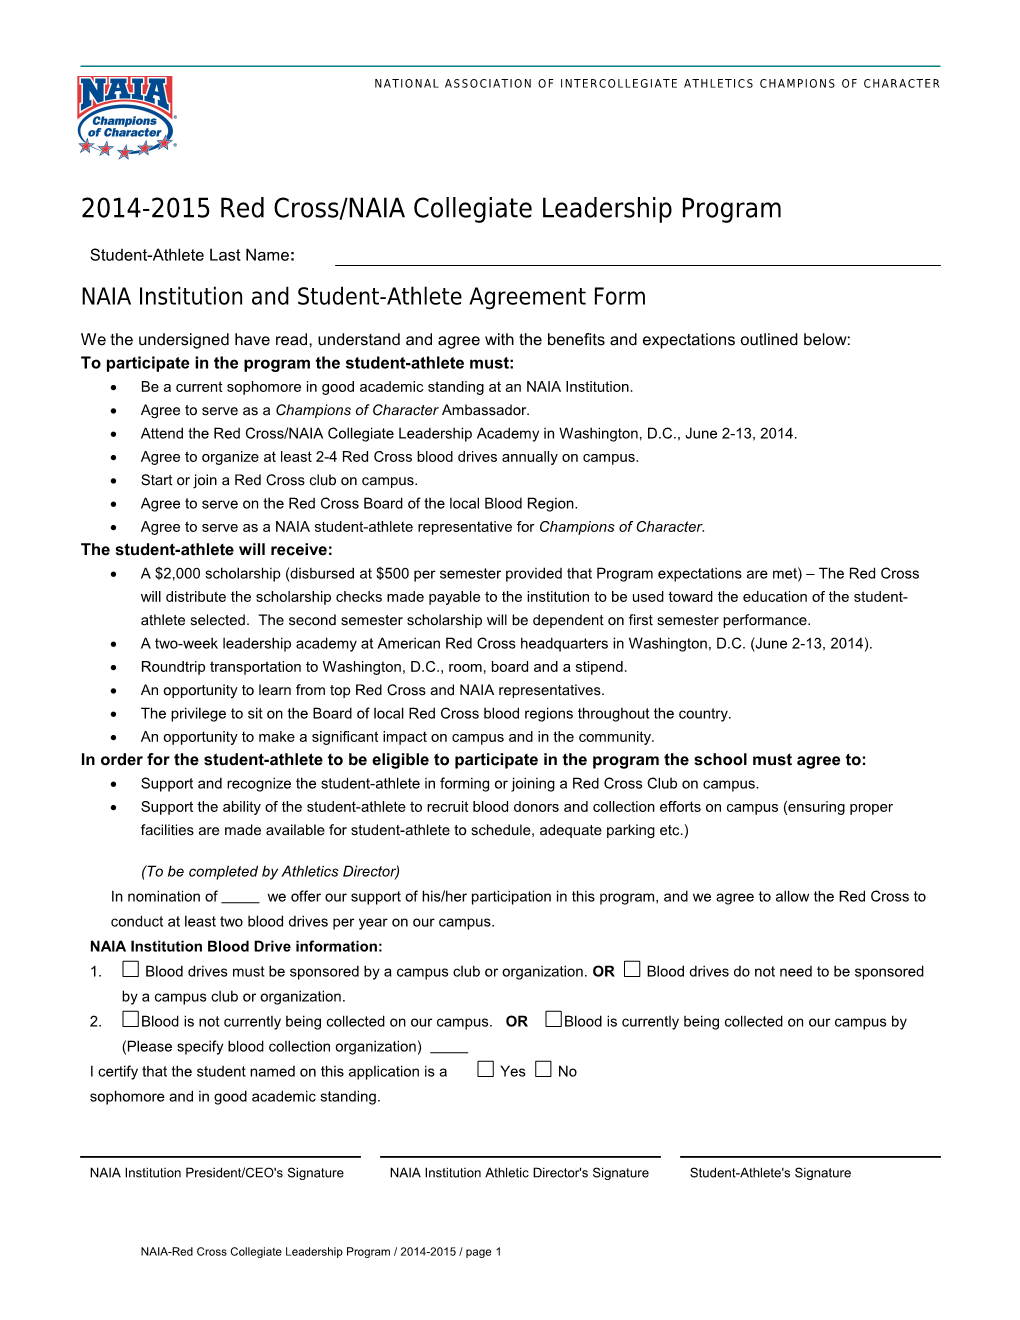 2014-2015Red Cross/NAIA Collegiate Leadership Program